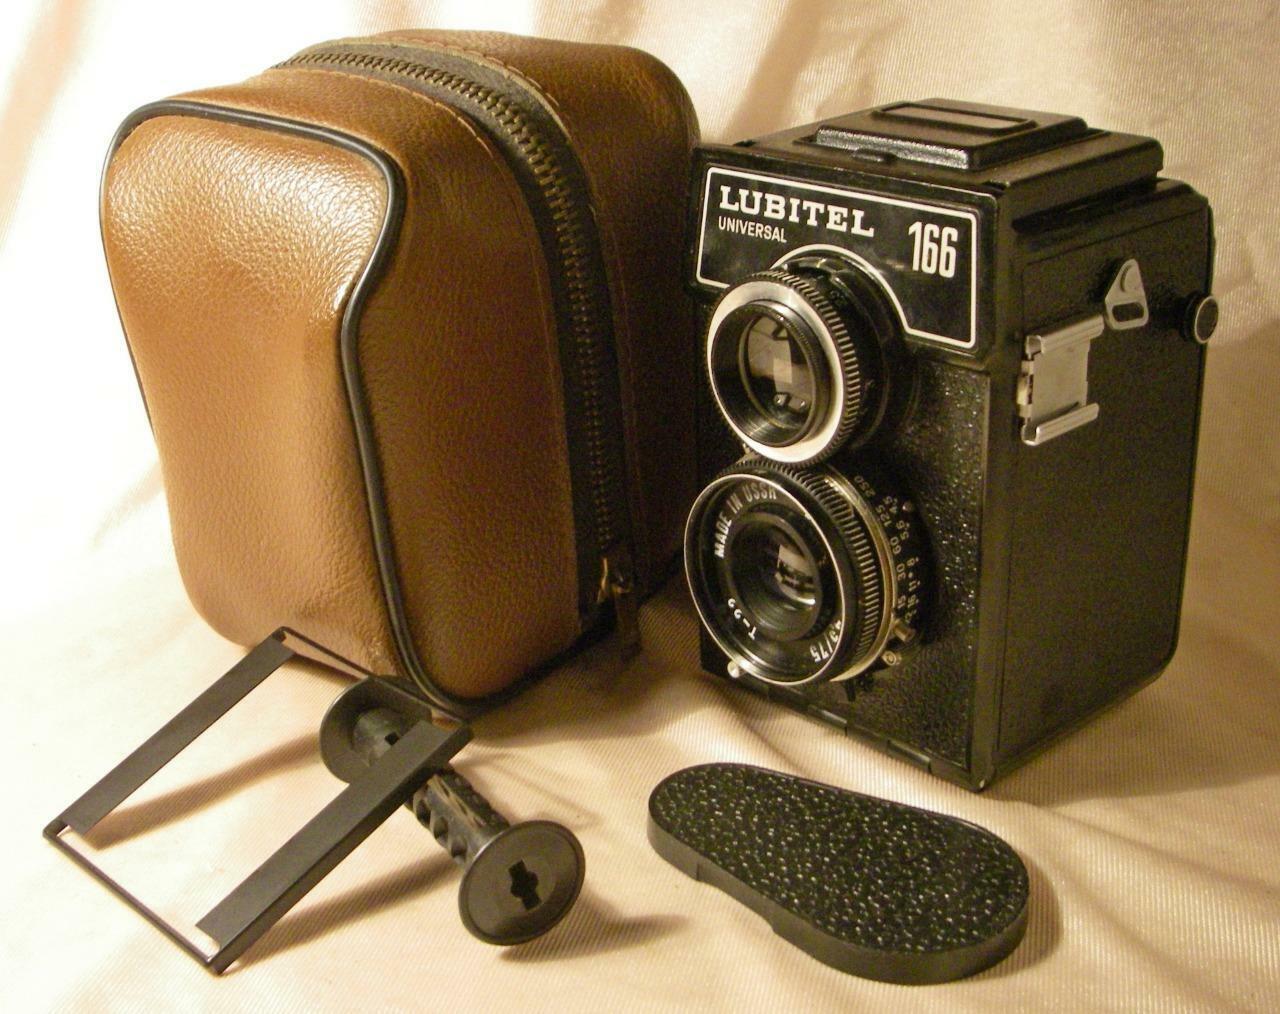 LOMO LUBITEL-166 UNIVERSAL camera 6x6+6x4.5cm medium format T-22 75mm lens 1990